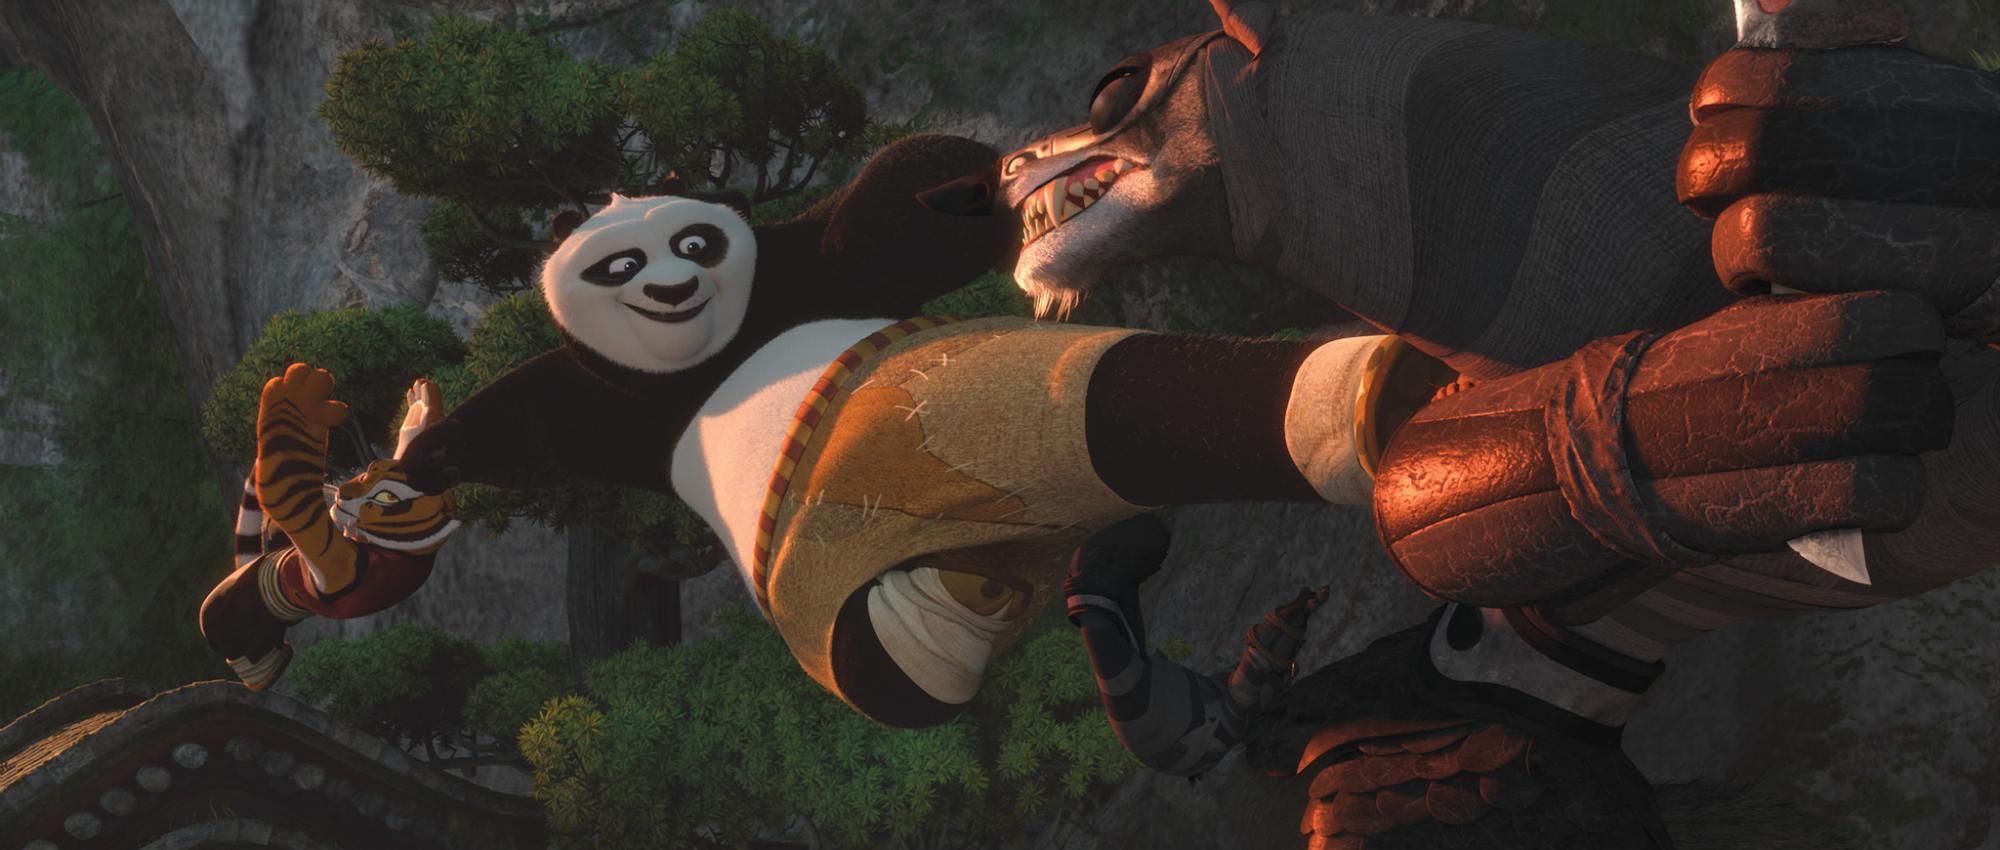 $!Confirma DreamWorks cuarta entrega de ‘Kung Fu Panda’